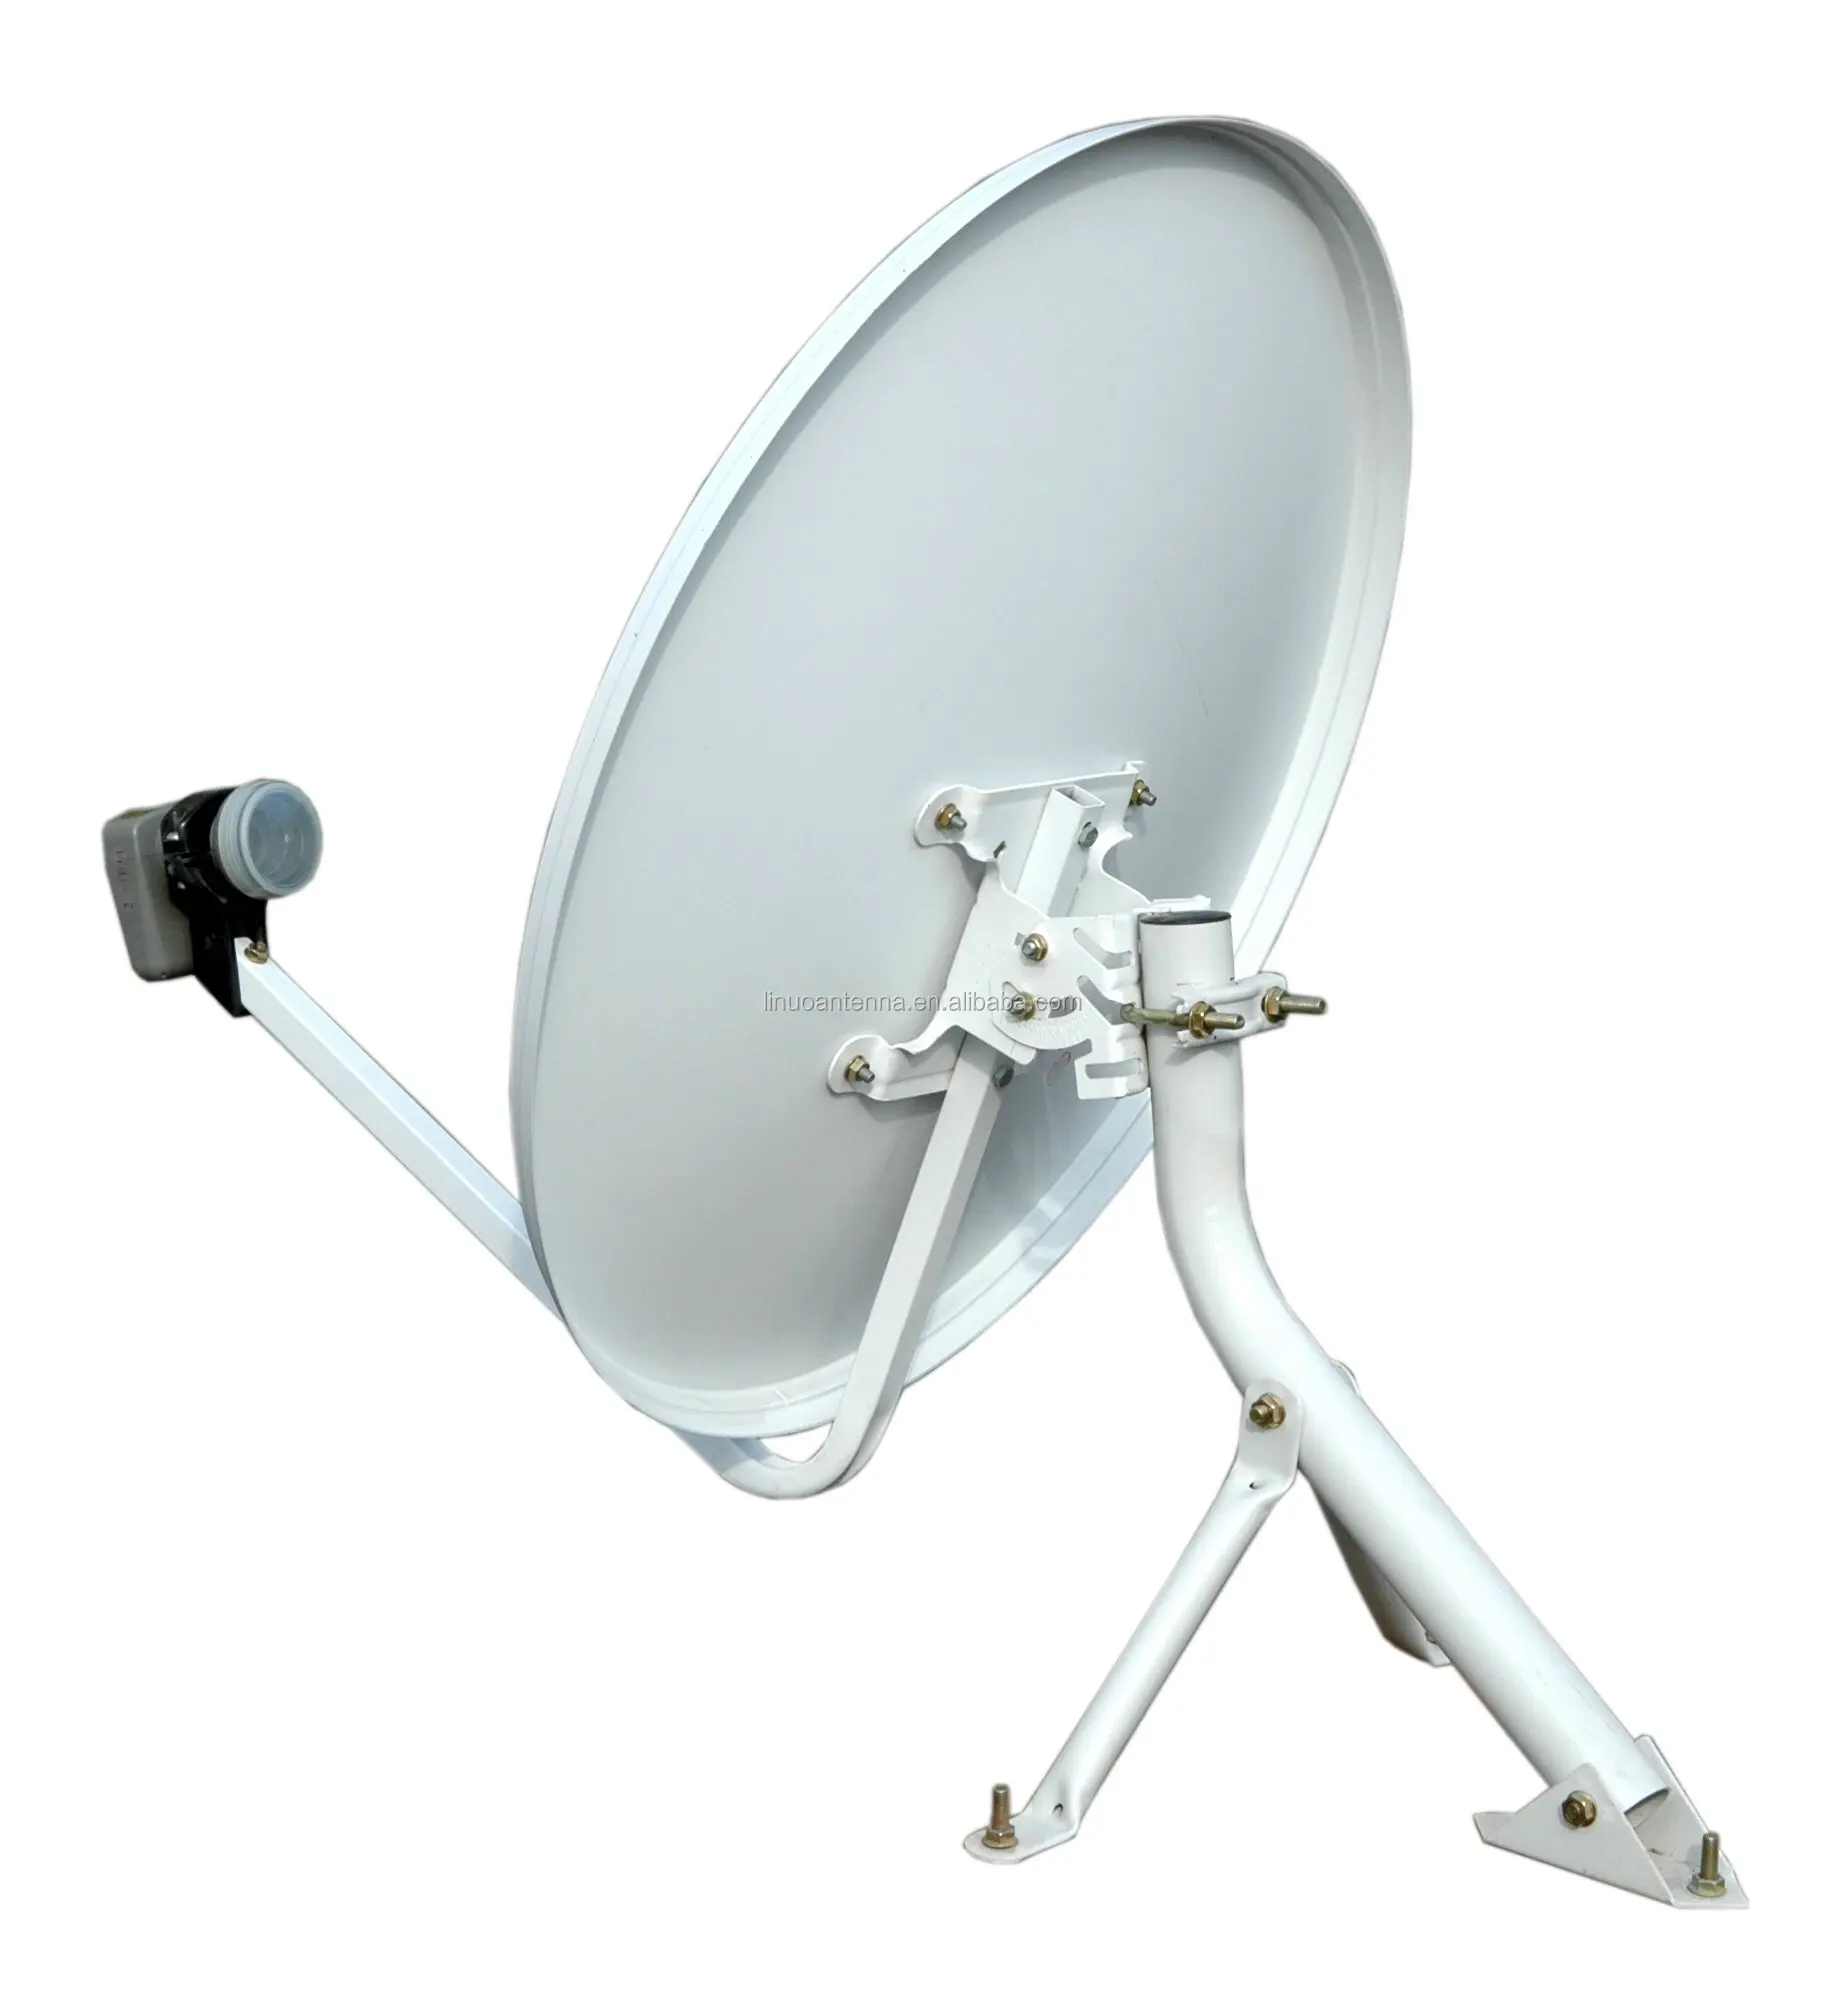 Satellite dish. Антенна спутниковая офсетная Аум CTB-0.9. Антенна спутниковая Супрал 0.9 м. Спутниковая тарелка Супрал 60 см. VSAT антенна ku 60см.